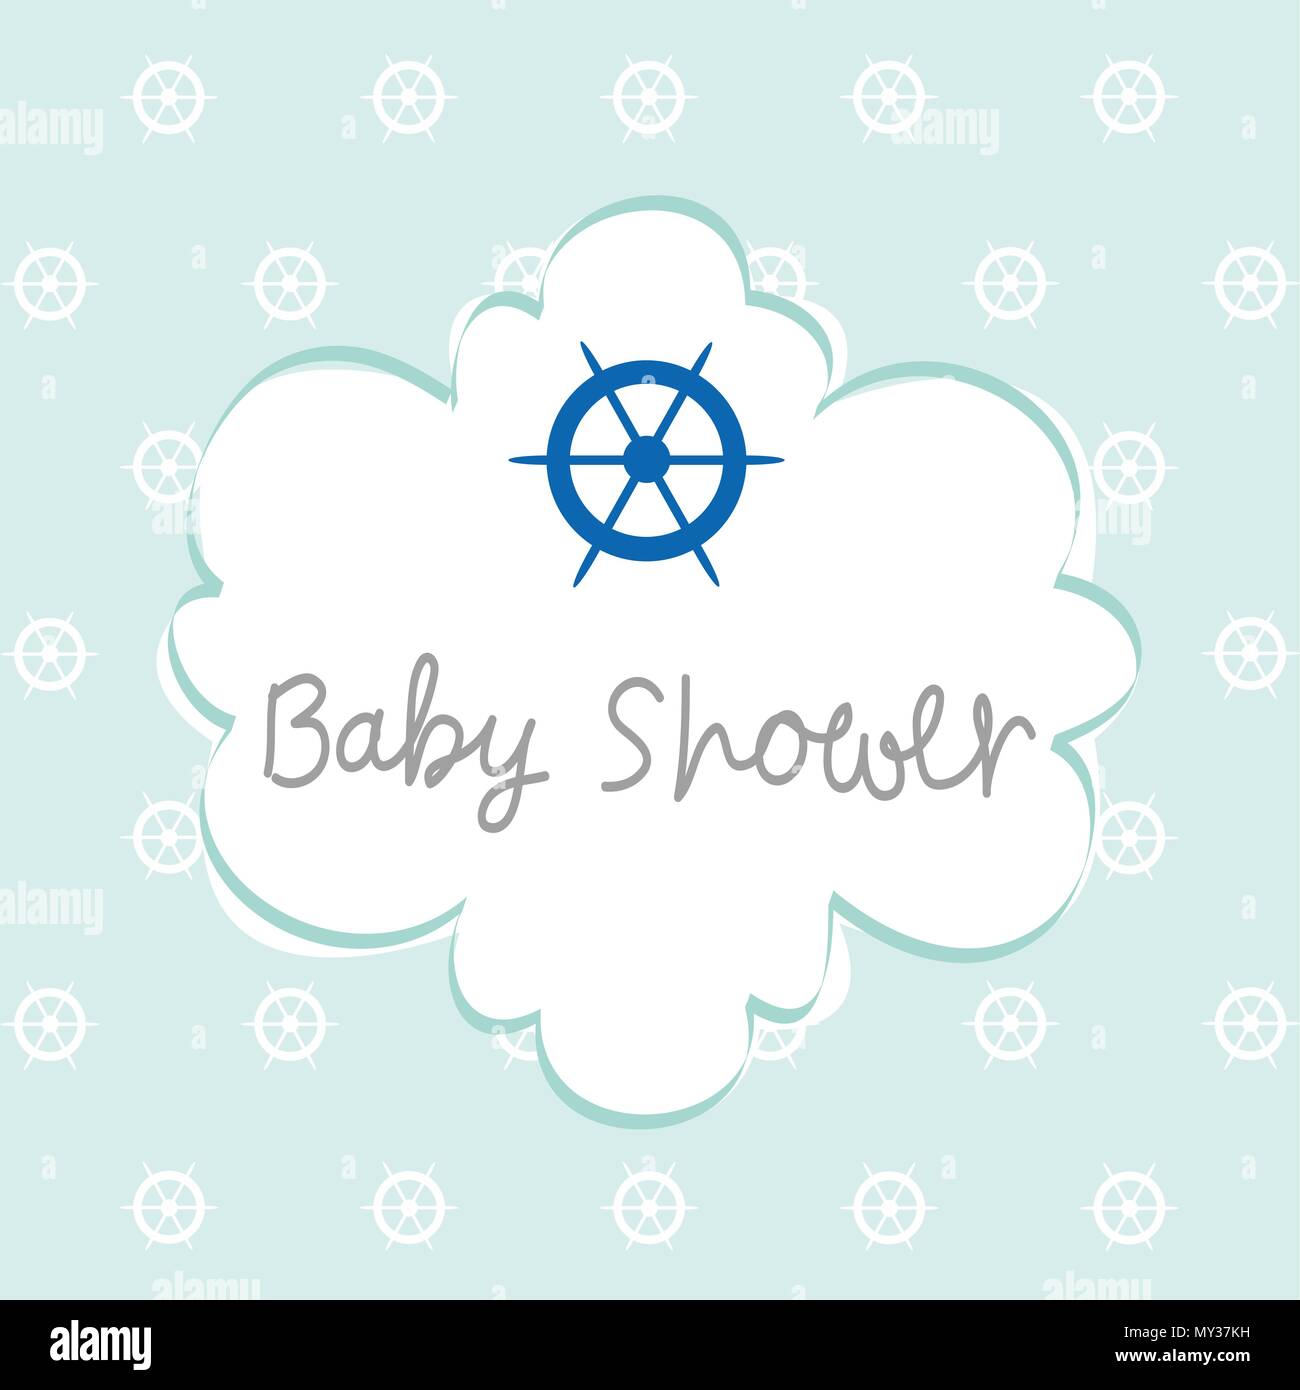 baby shower invitation design Stock Vector